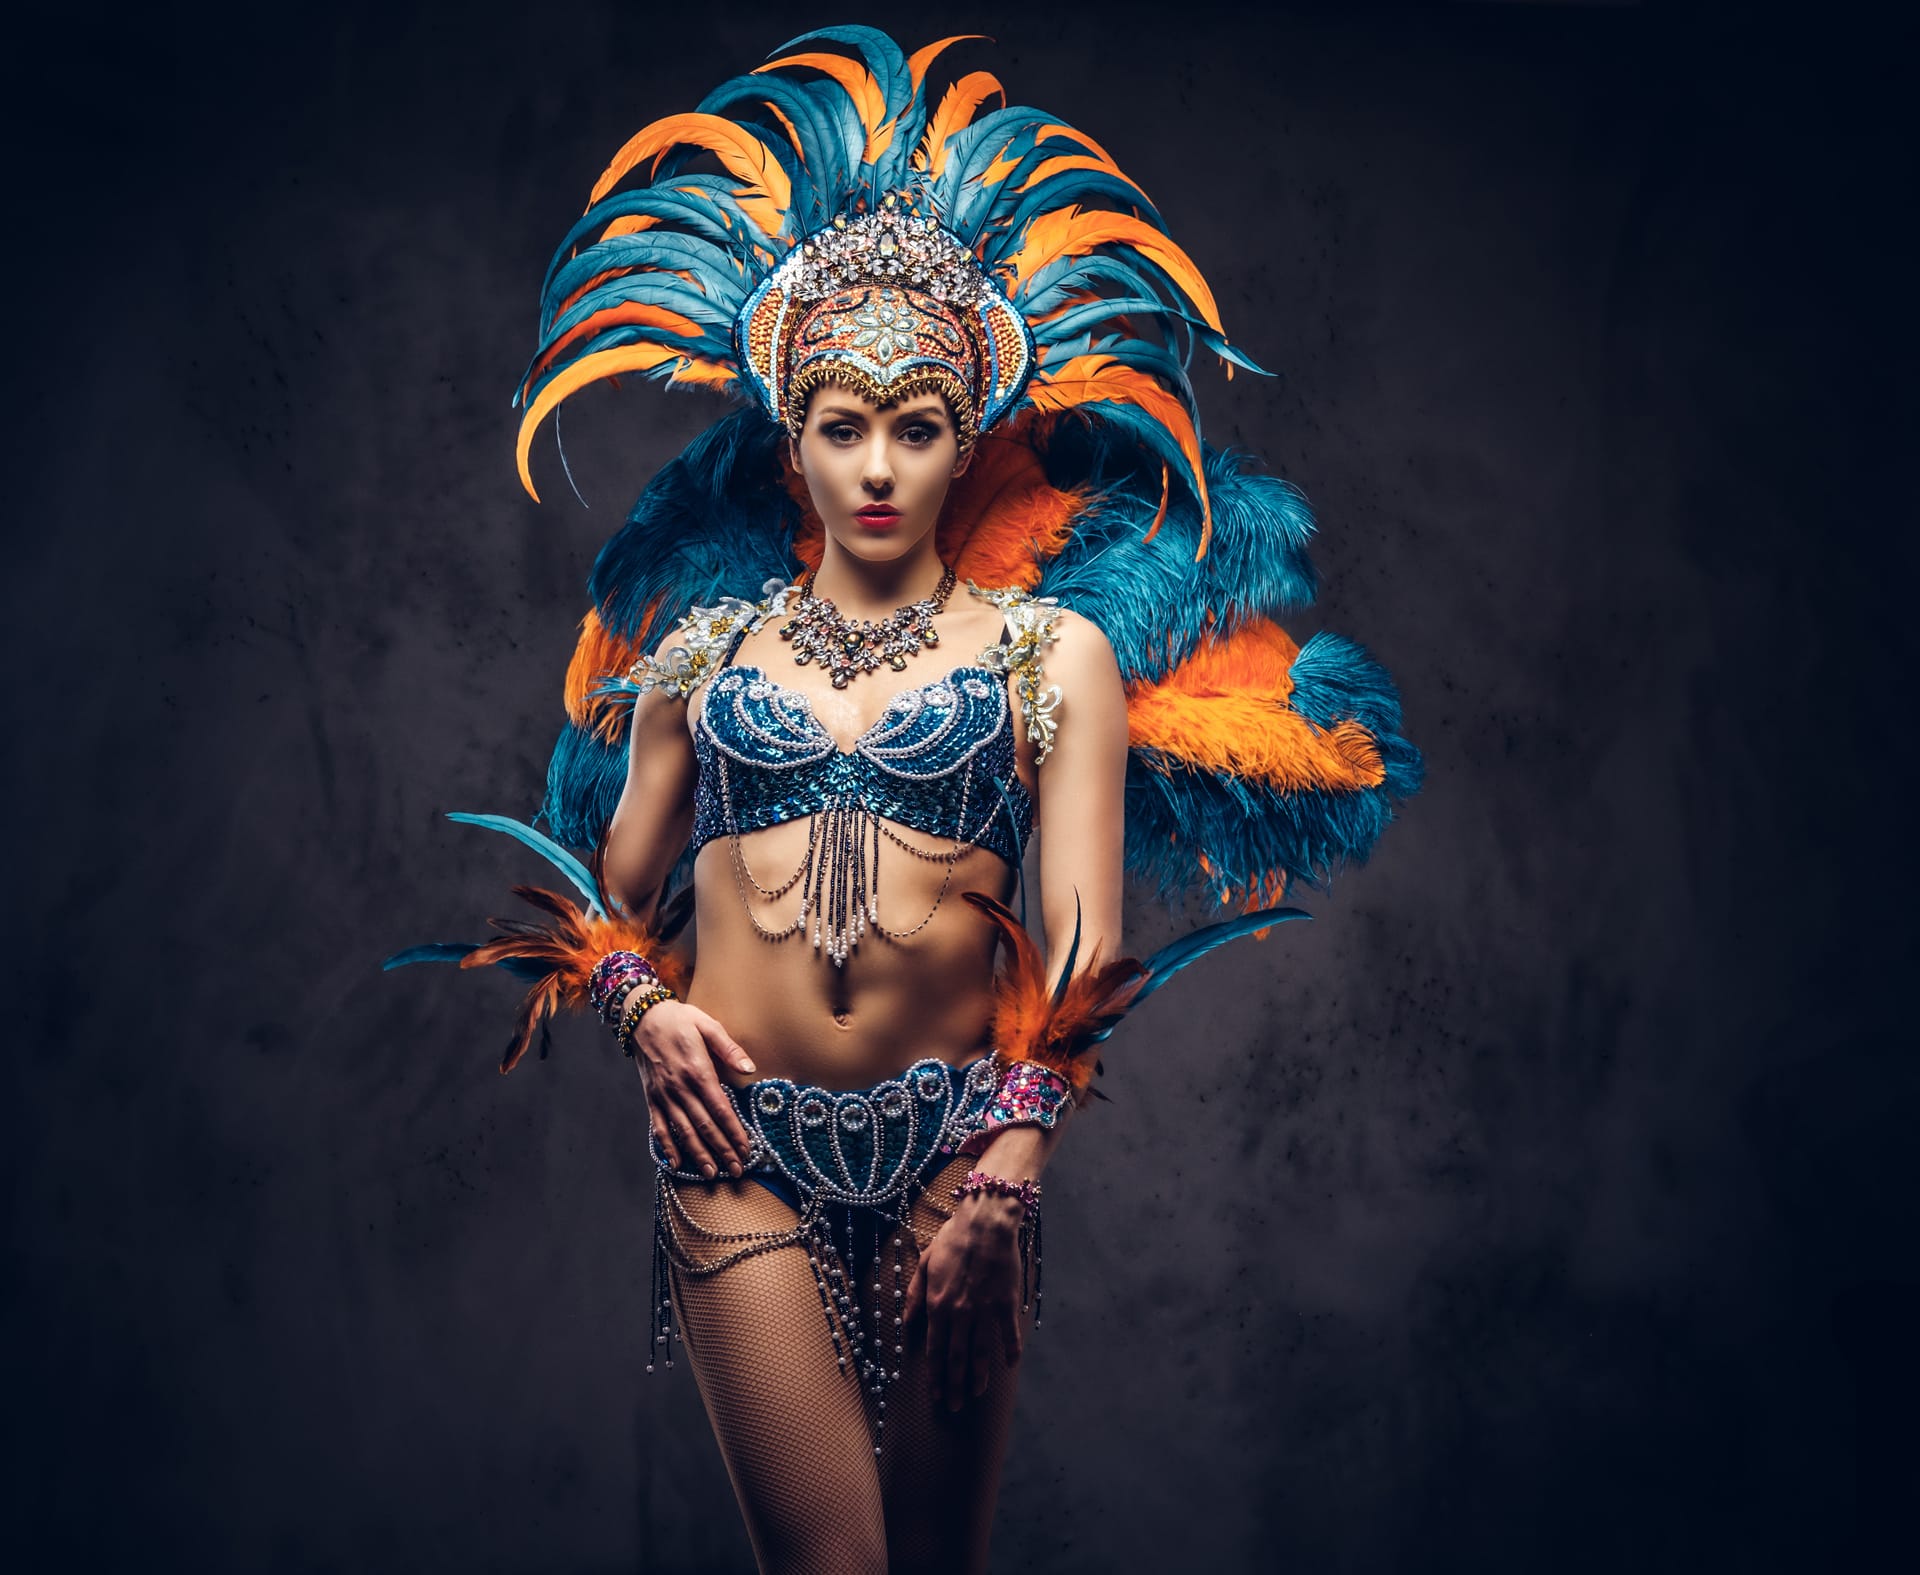 Studio portrait sexy female colorful sumptuous carnival feather suit posing dark background